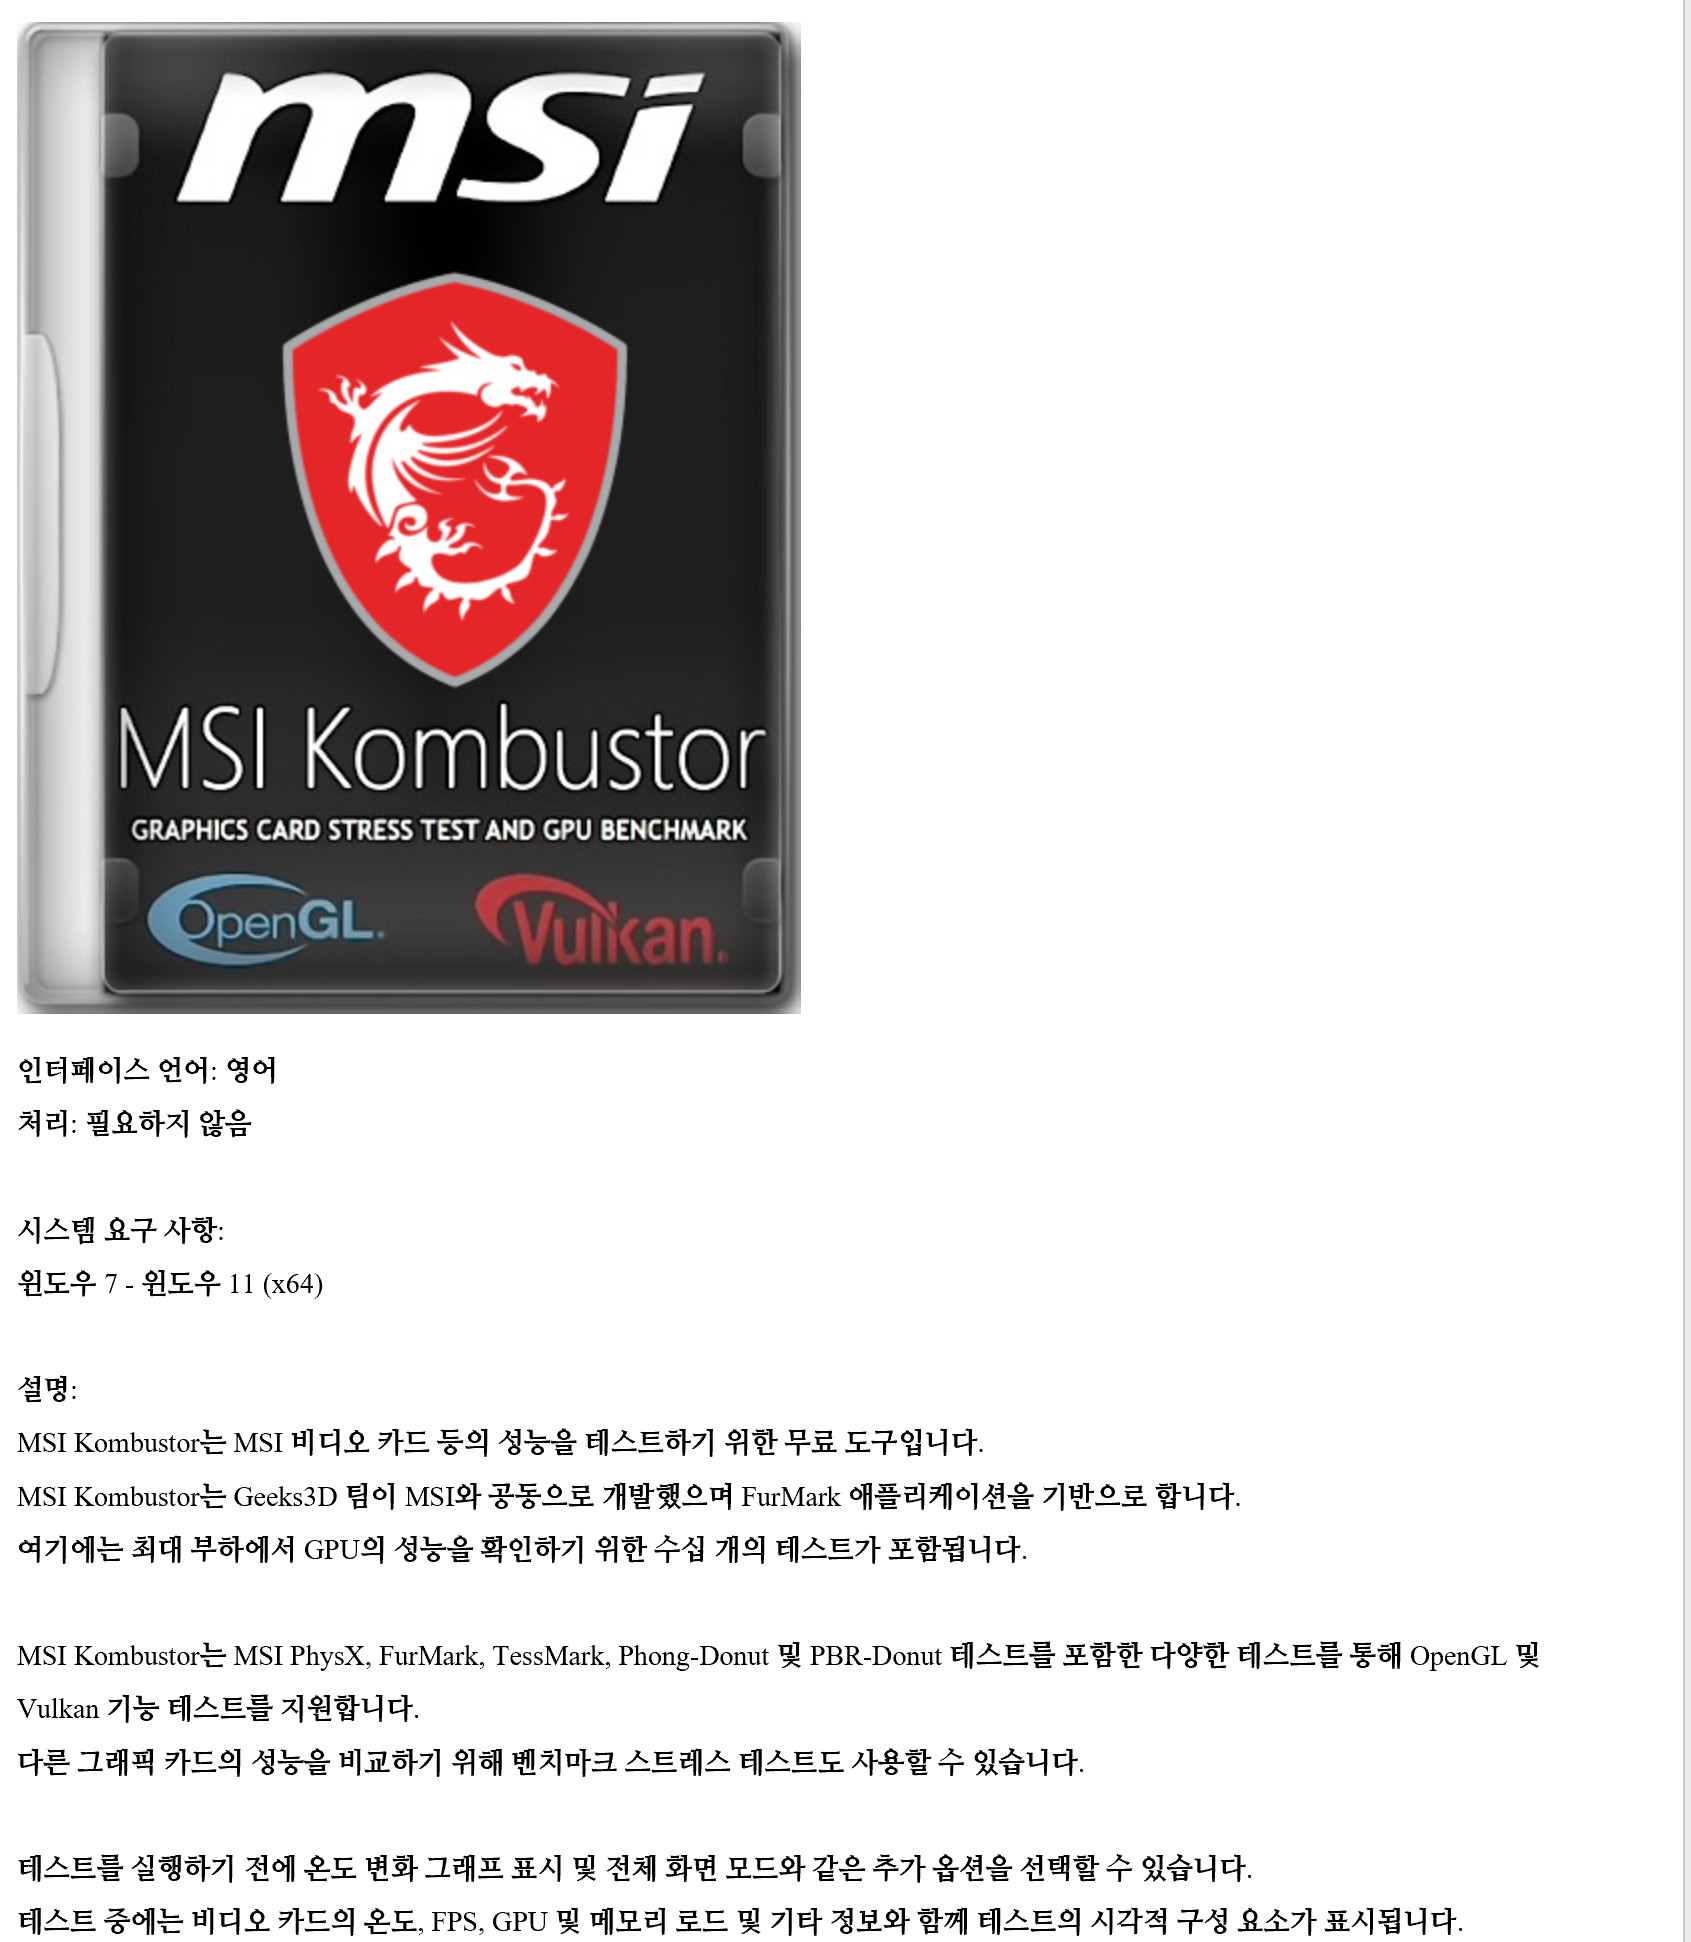 MSI Kombustor 4.1.27 free instal